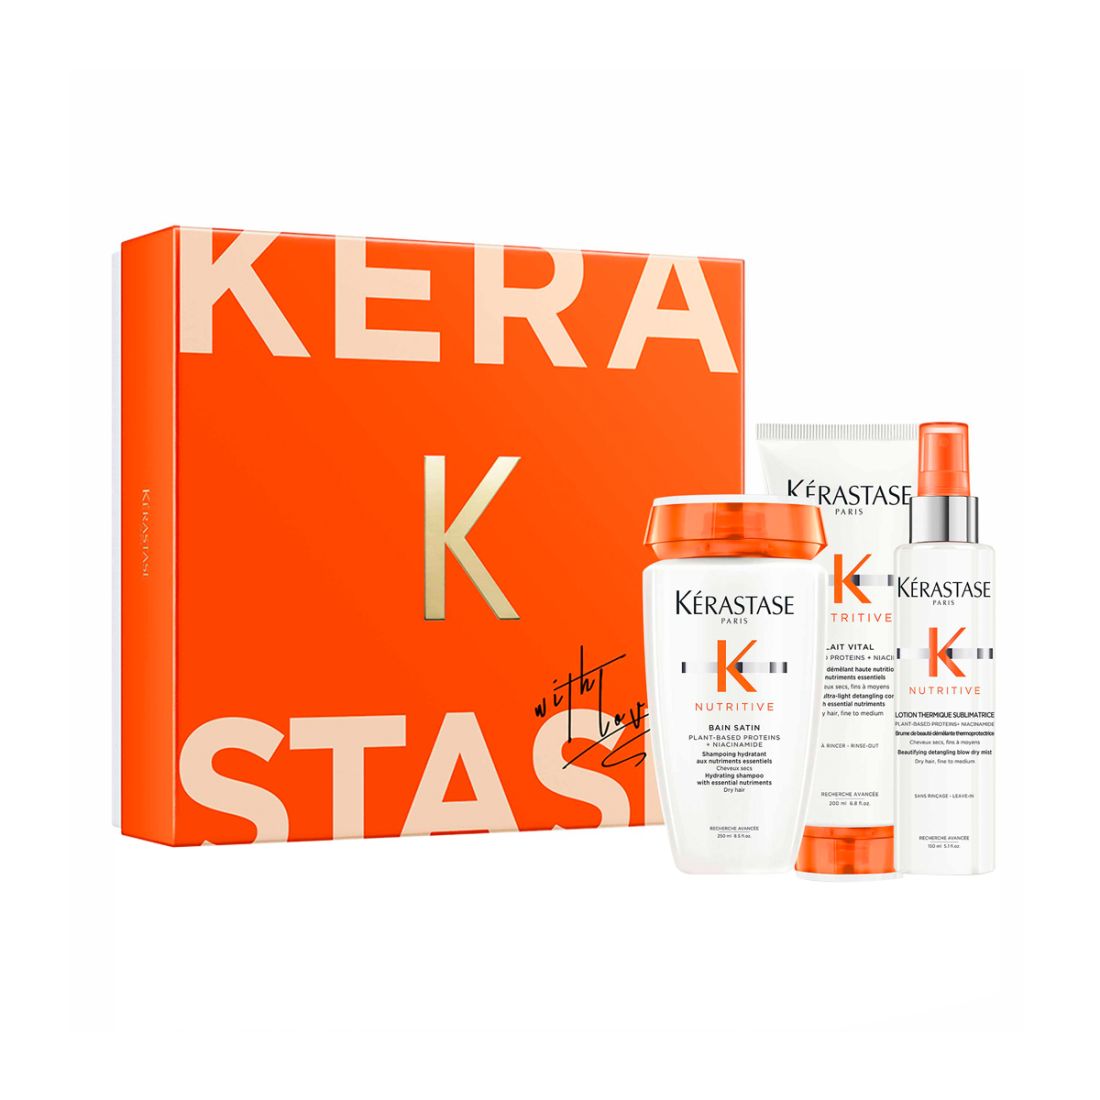 Kerastase Nutritive - Limited Edition Σετ Περιποίησης για Ξηρά Μαλλιά με Λεπτή Τρίχα (Bain Satin Shampoo 250ml, Lait Vital Conditioner 200ml, Lotion Thermique Subliminatrice 150ml)